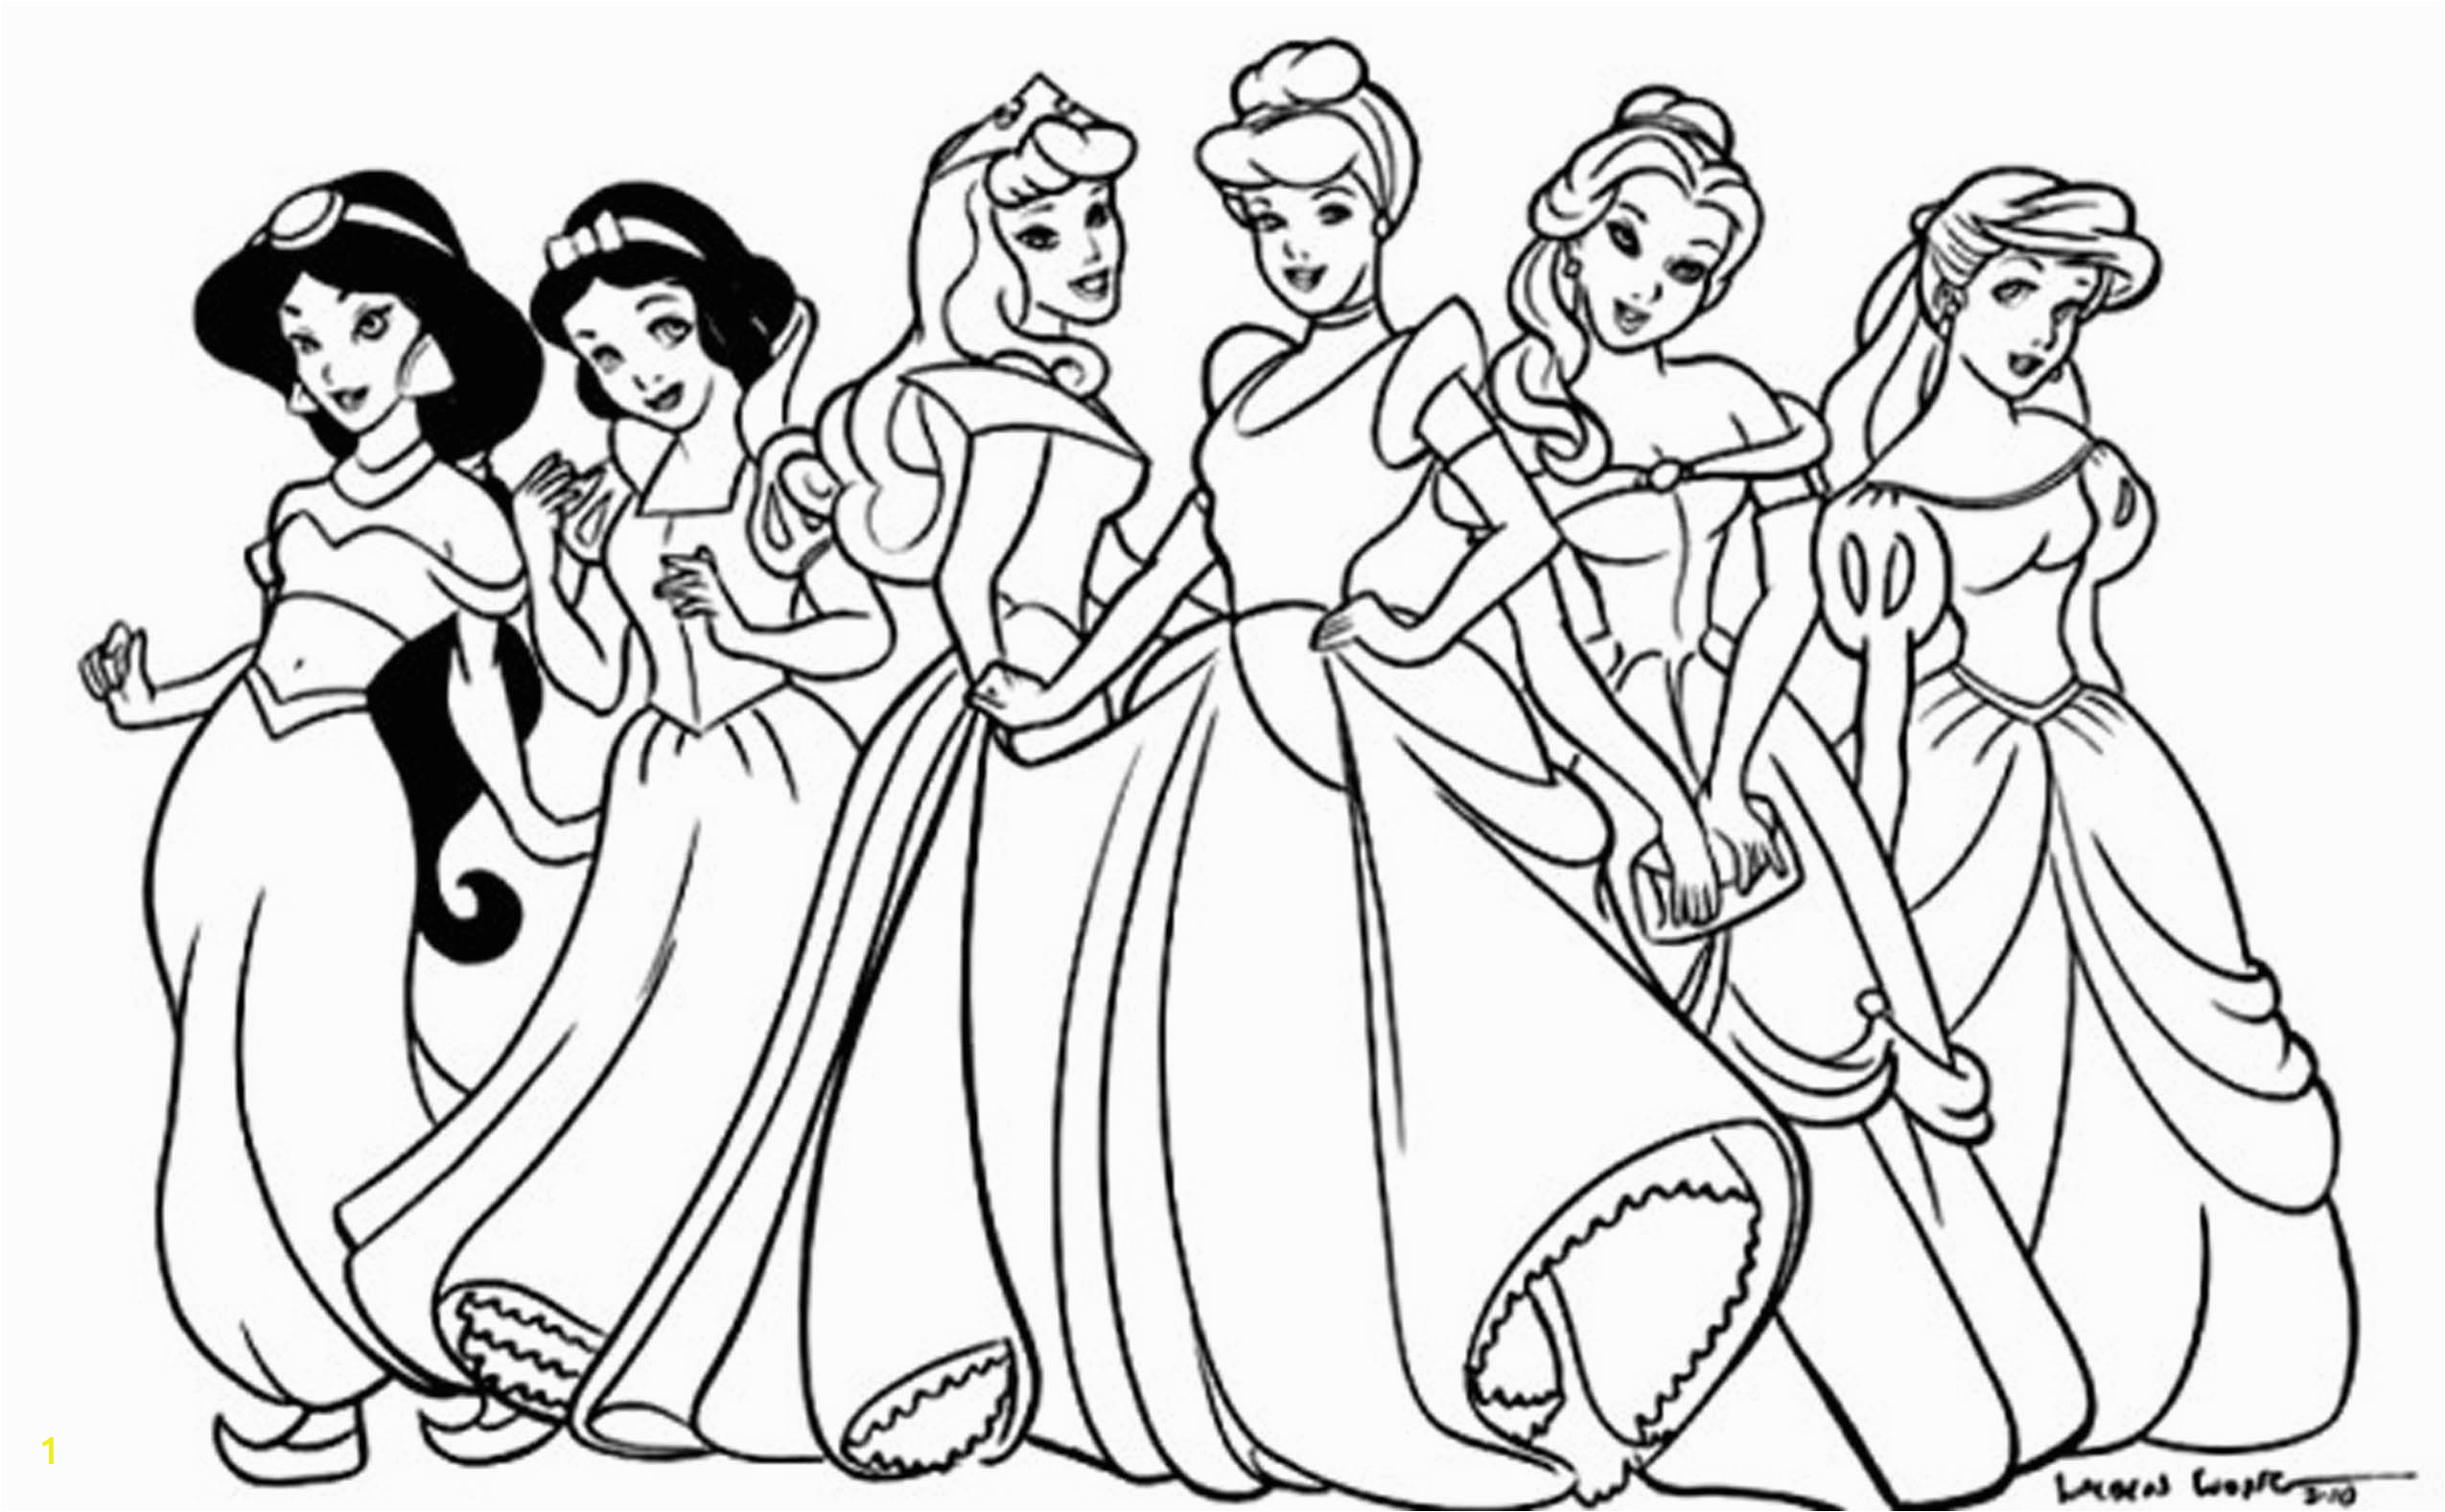 Free Coloring Pages Disney Princesses Disney Princess Coloring Pages Mit Bildern